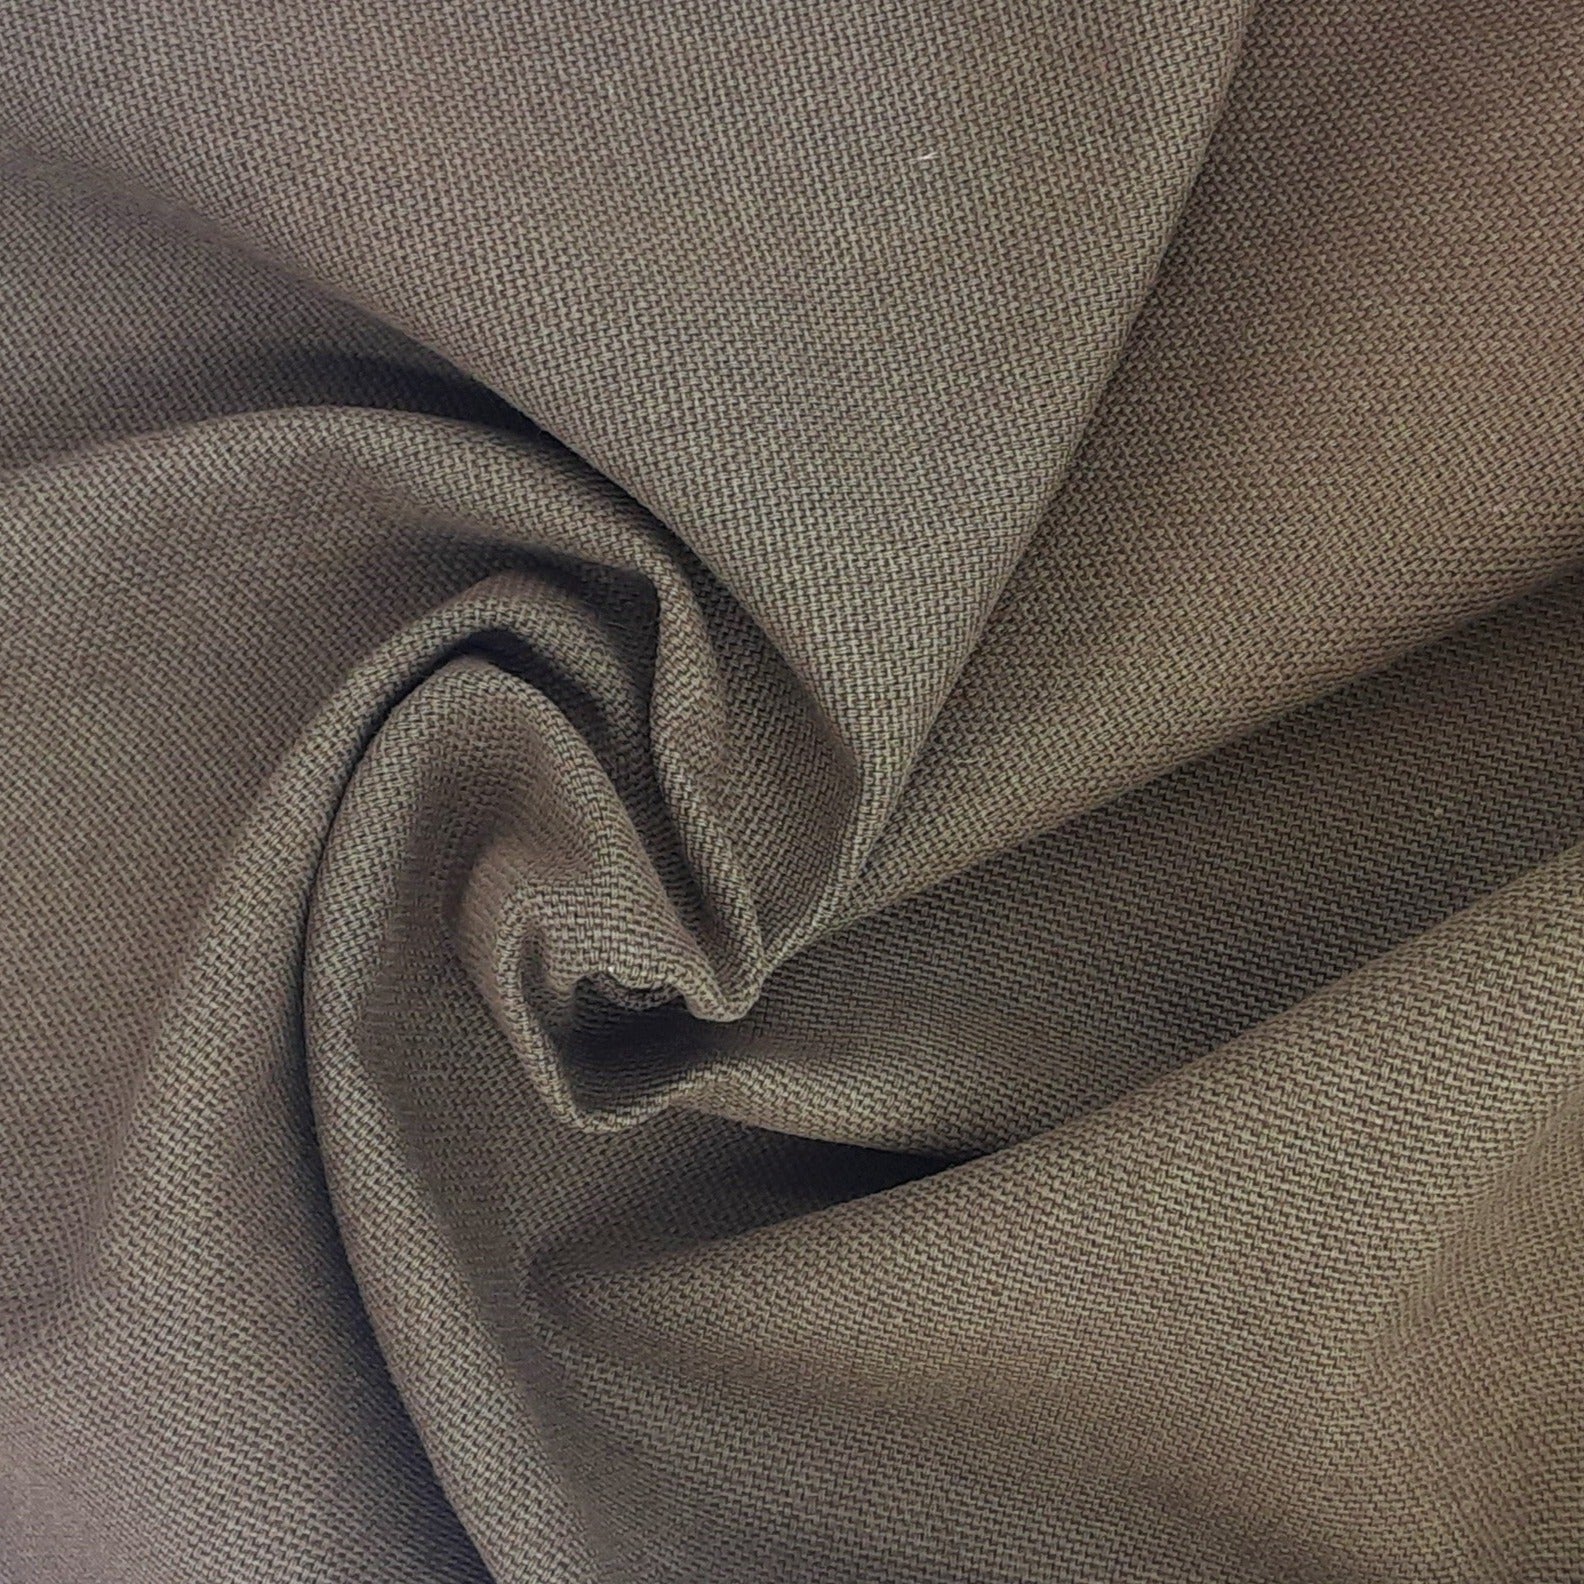 Mocha #S813 Veranda Upholstery Canvas Woven Fabric - 6878B